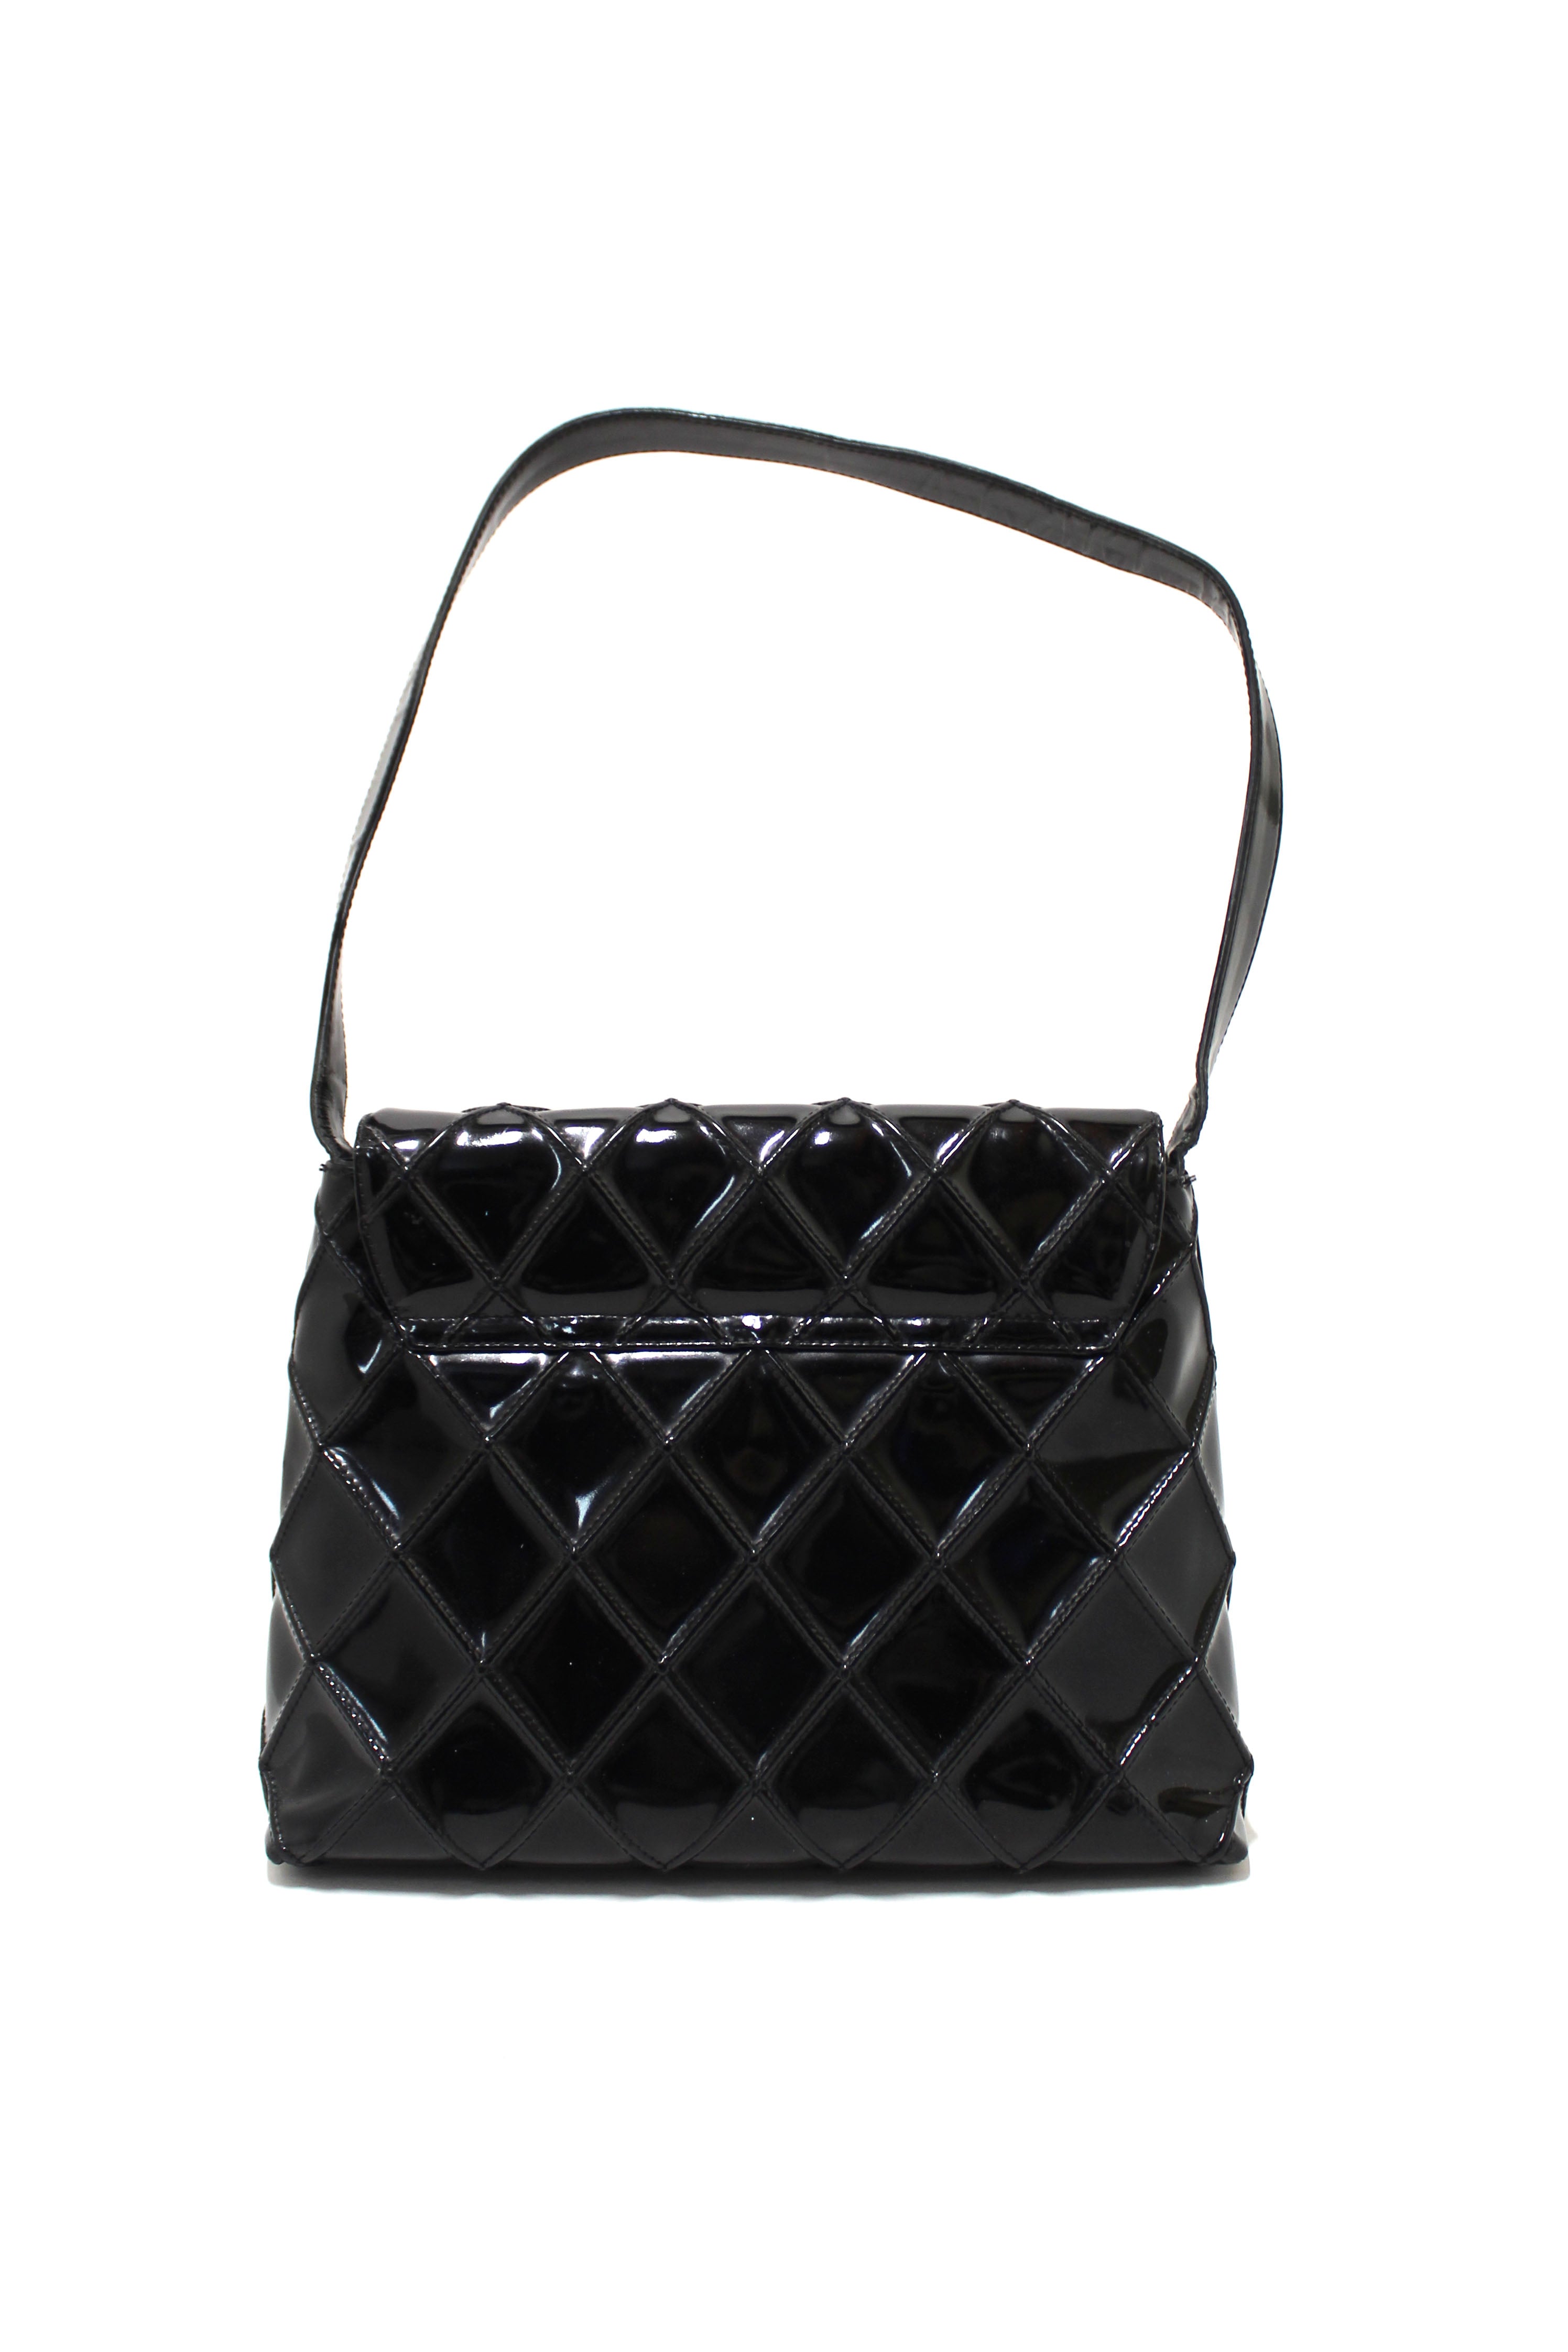 Authentic Chanel Black Quilted Patent Leather CC Twist Flap Shoulder Bag